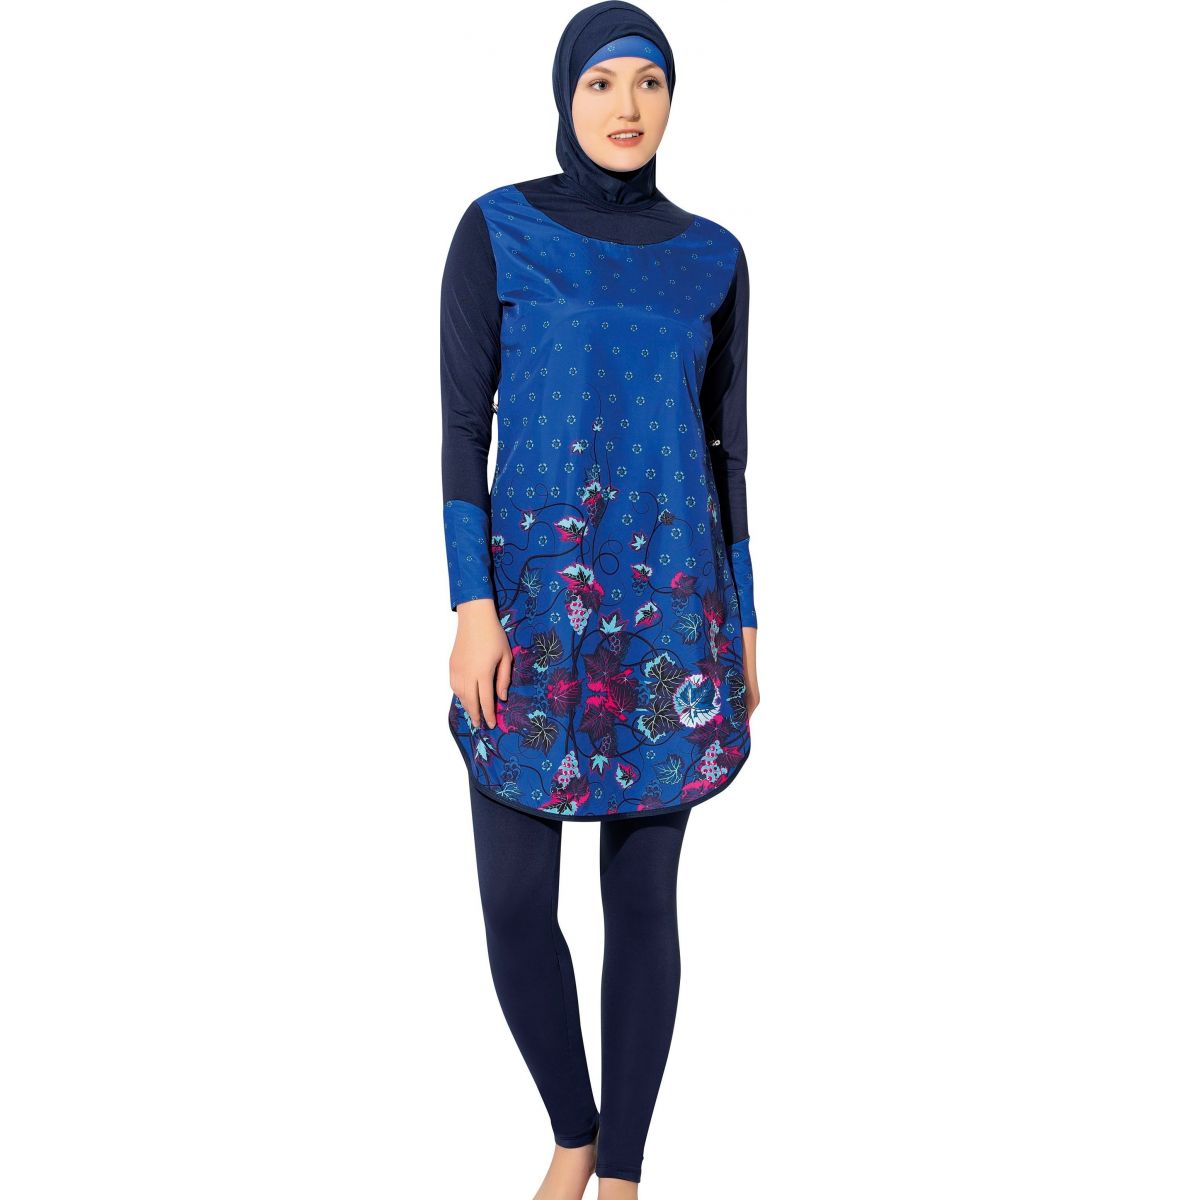 Argisa 7115 Long Sleeve burkini Muslim Swimwear S-XXL Hidden Zipper Hijab Hijab Islamic Swimsuit Burkinis Full Cover Swim surf